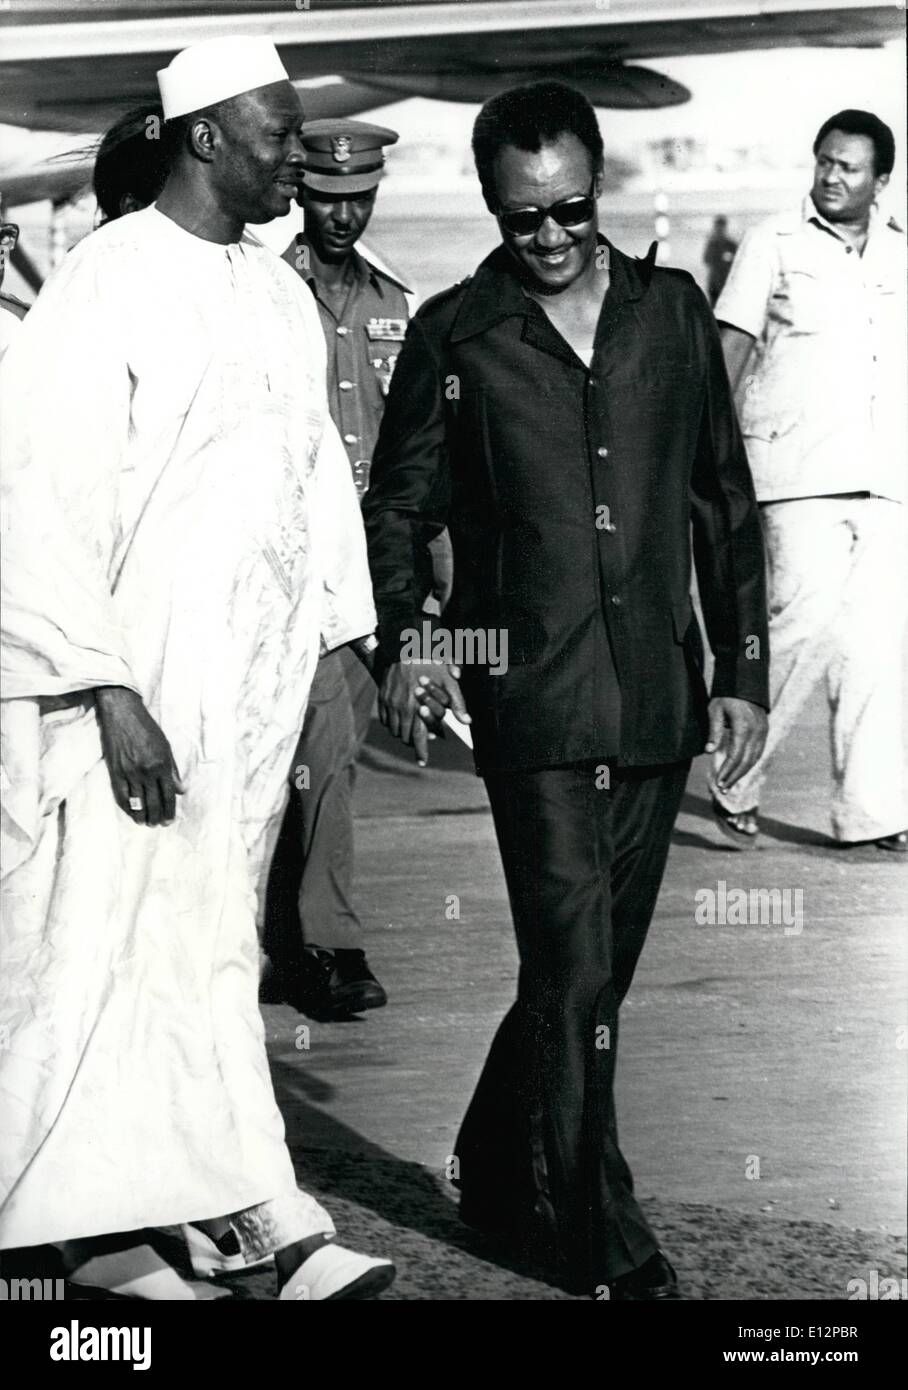 Feb. 24, 2012 - African Leaders At OAU Summit In Khartoum. Sudan.: The host President Gaafar Nimeiri with the Stock Photo